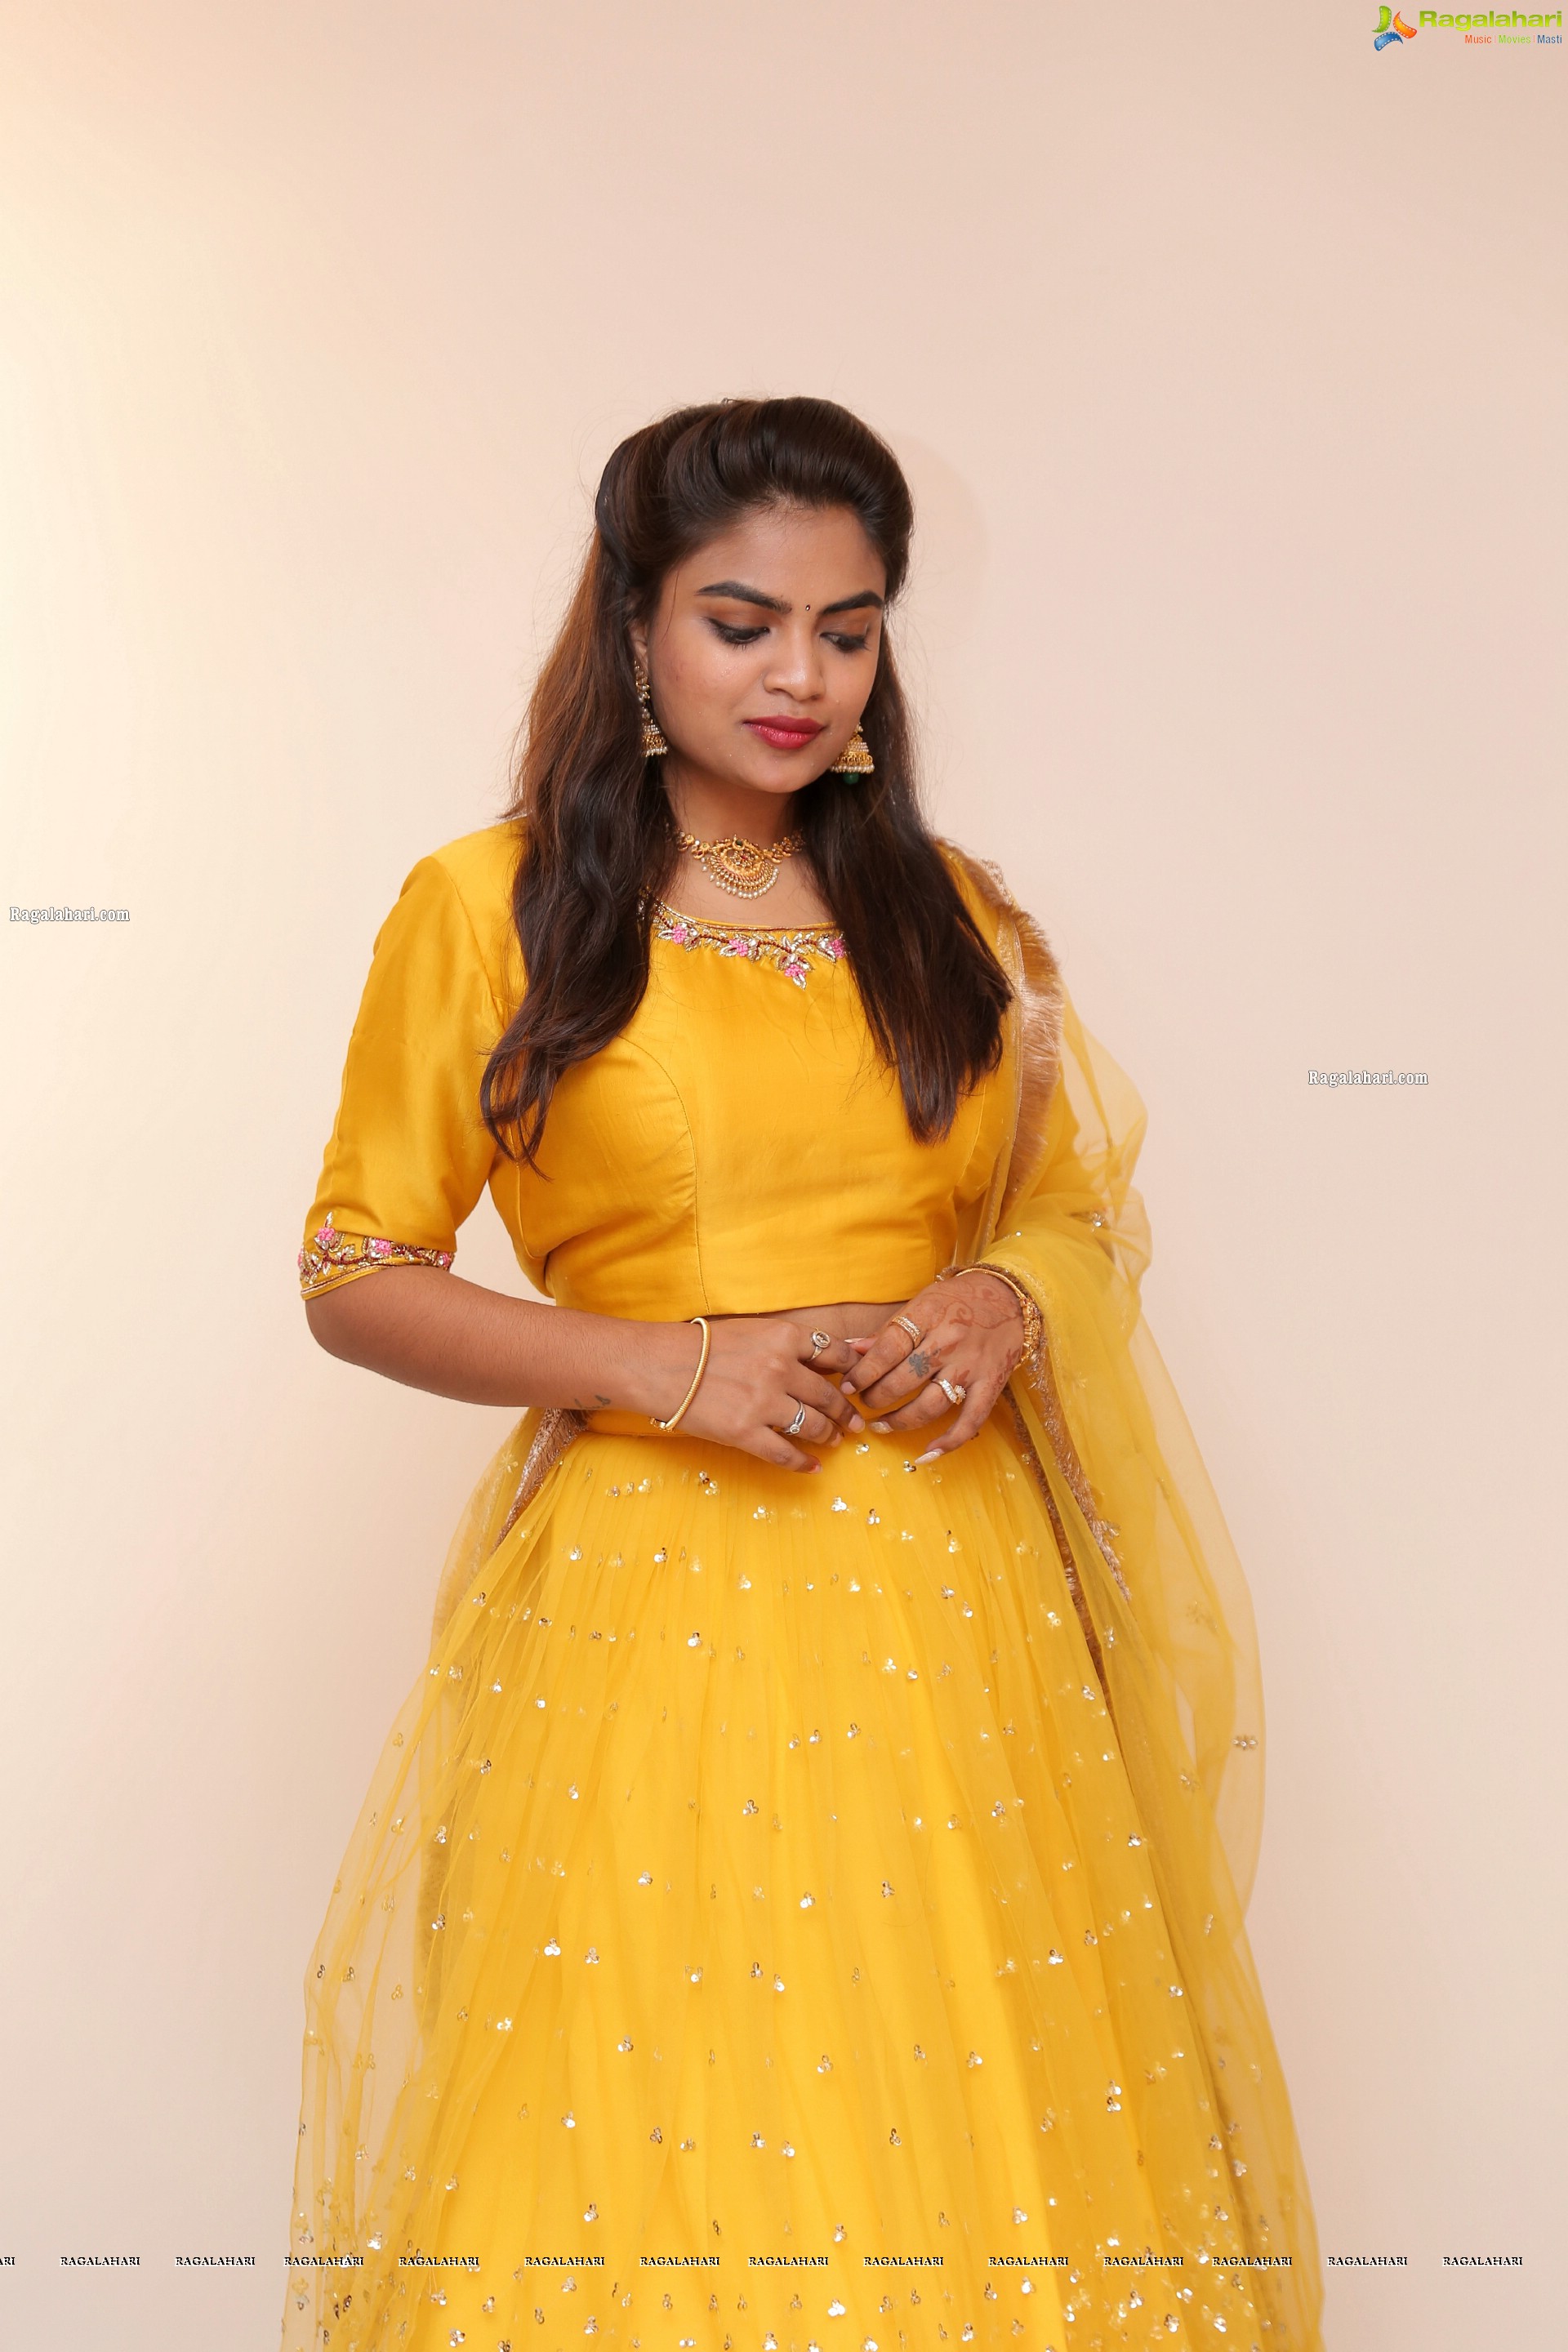 Model Madhu in Yellow Lehenga Choli, HD Photo Gallery